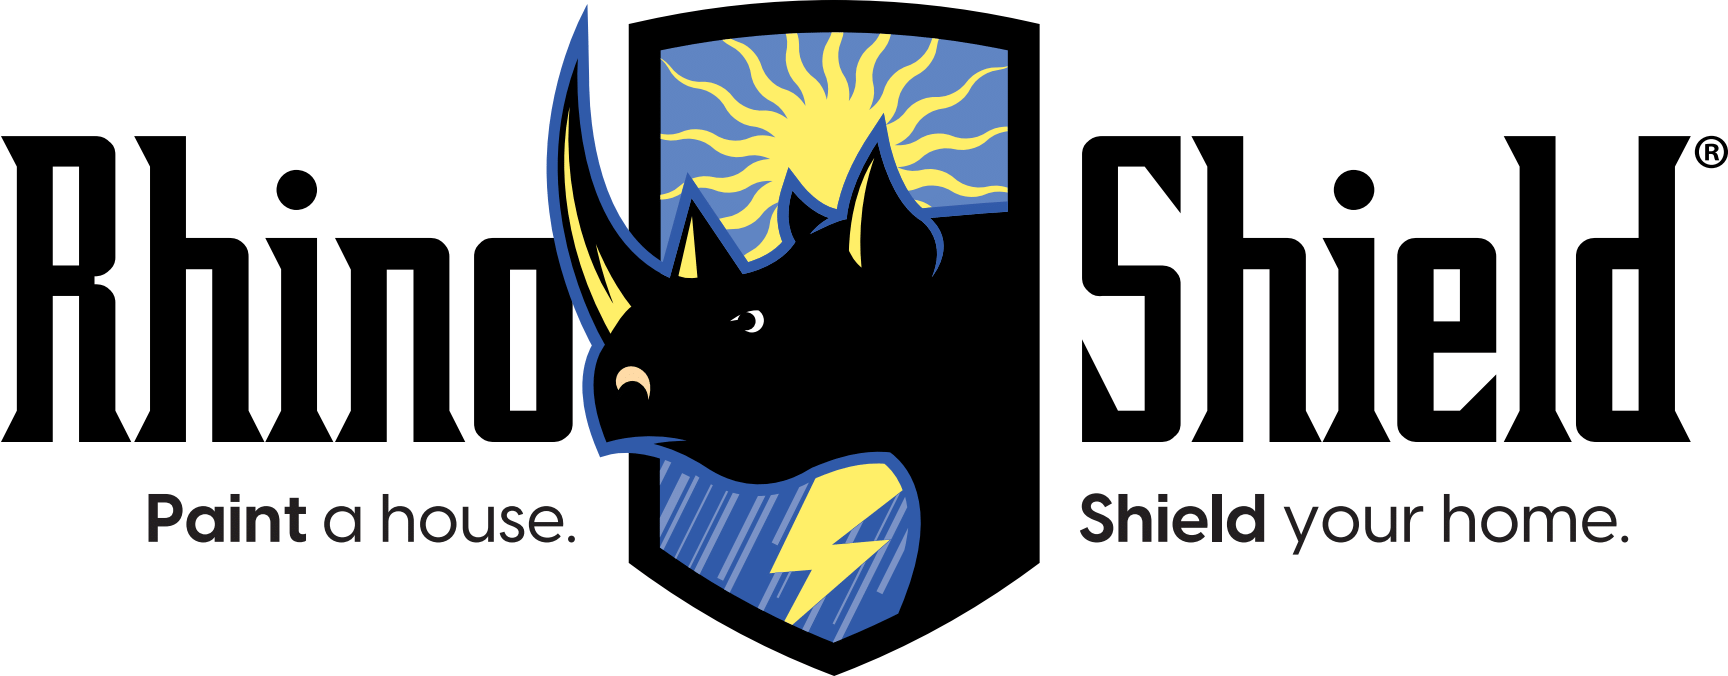 Rhino Shield of Indiana Business Logo